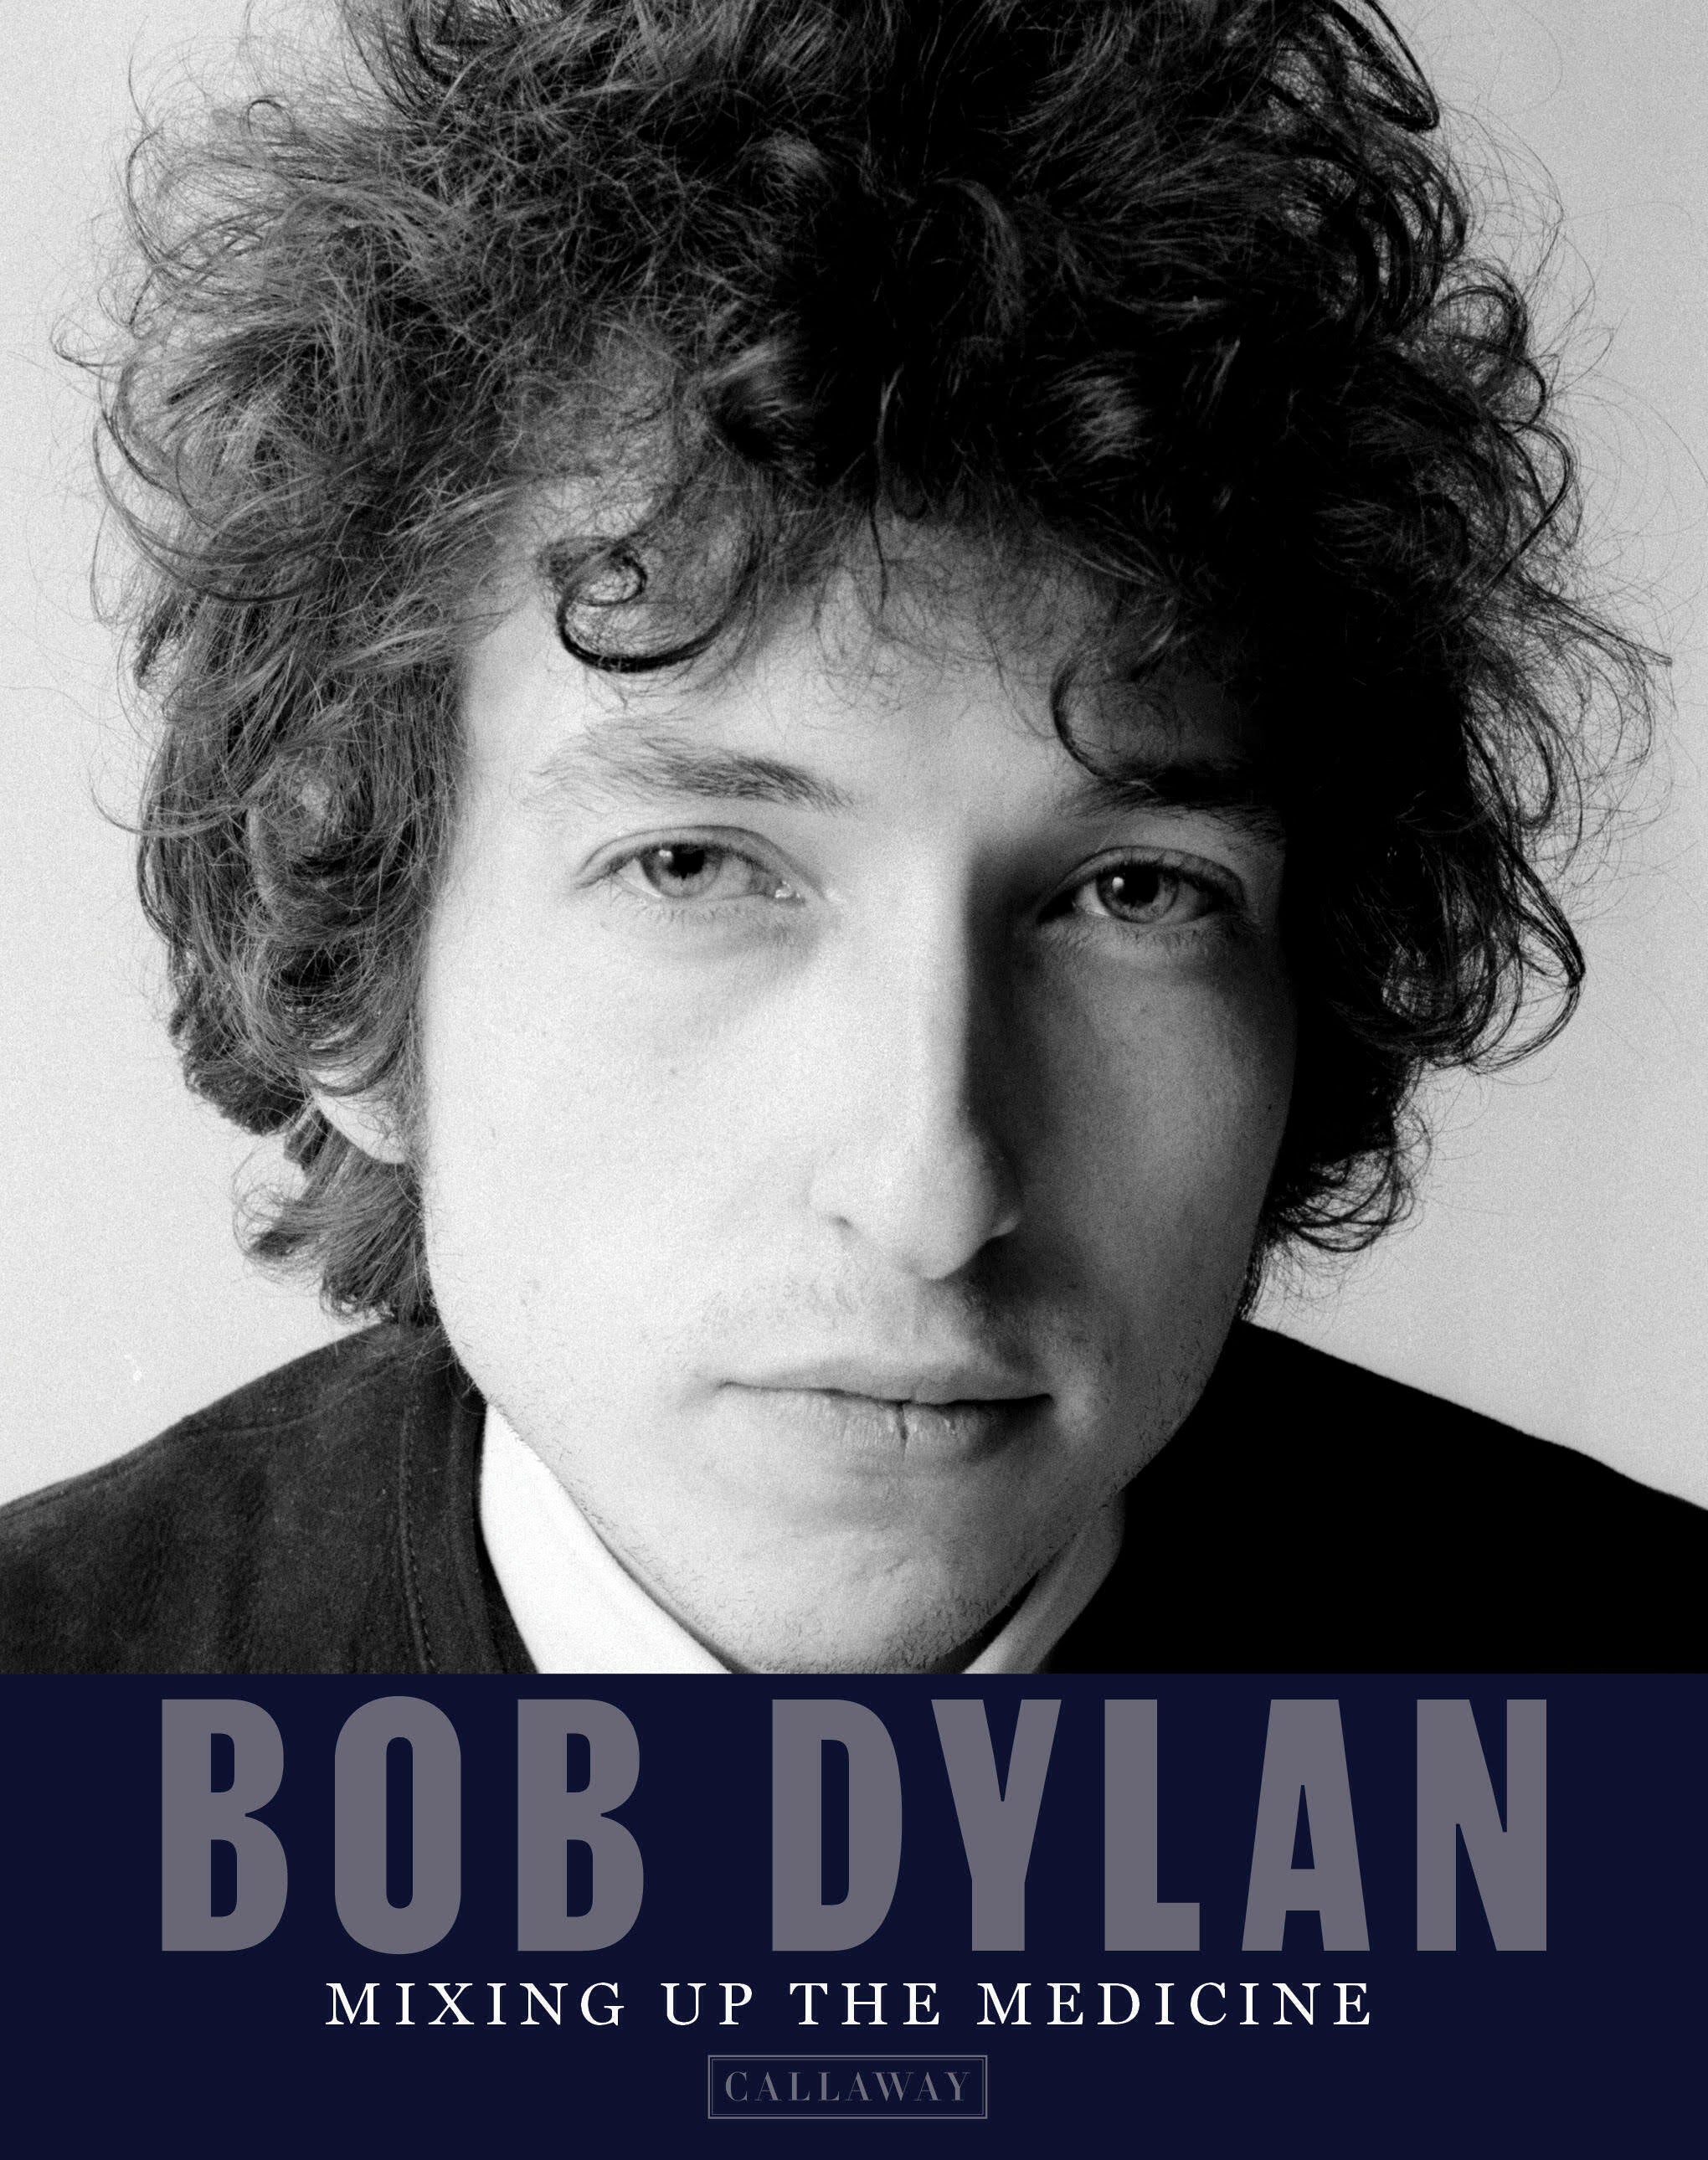 Books Bob Dylan 86956 